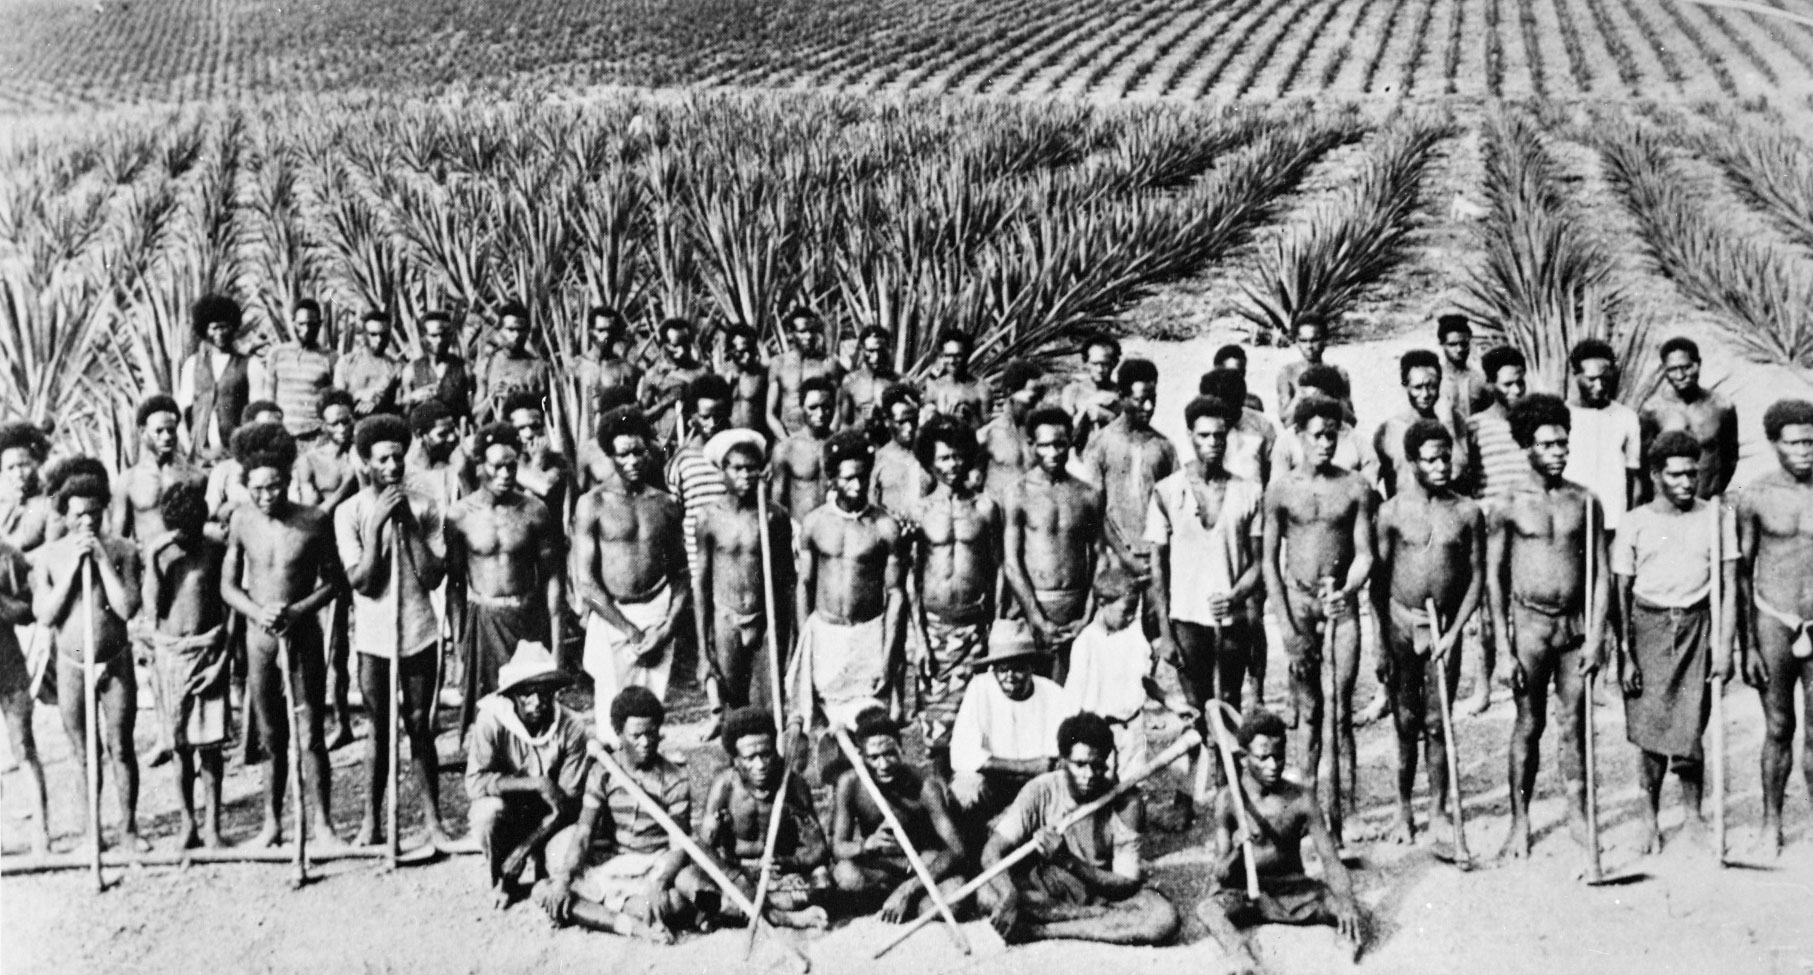 South Sea Islander labourers on a Queensland pineapple plantation.